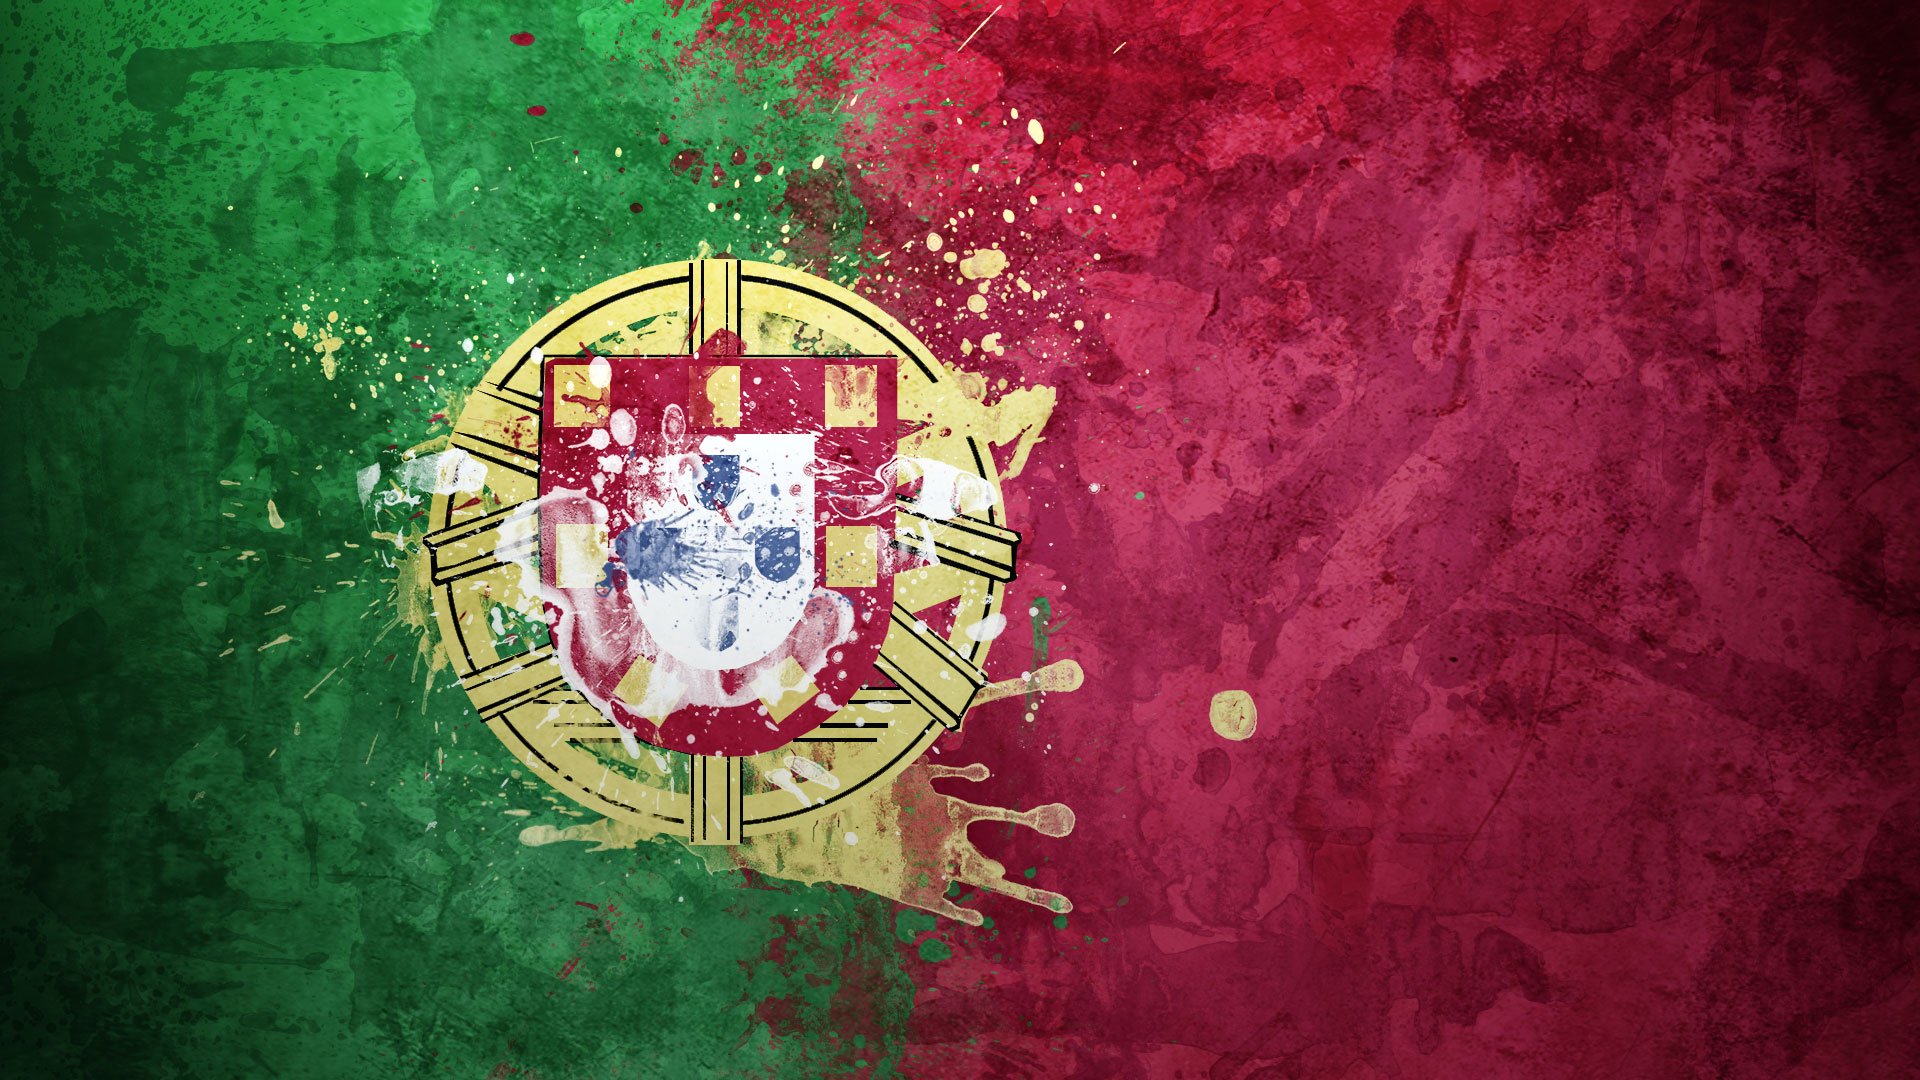 PORTUGAL soccer (14) wallpaper | 1920x1080 | 362390 | WallpaperUP